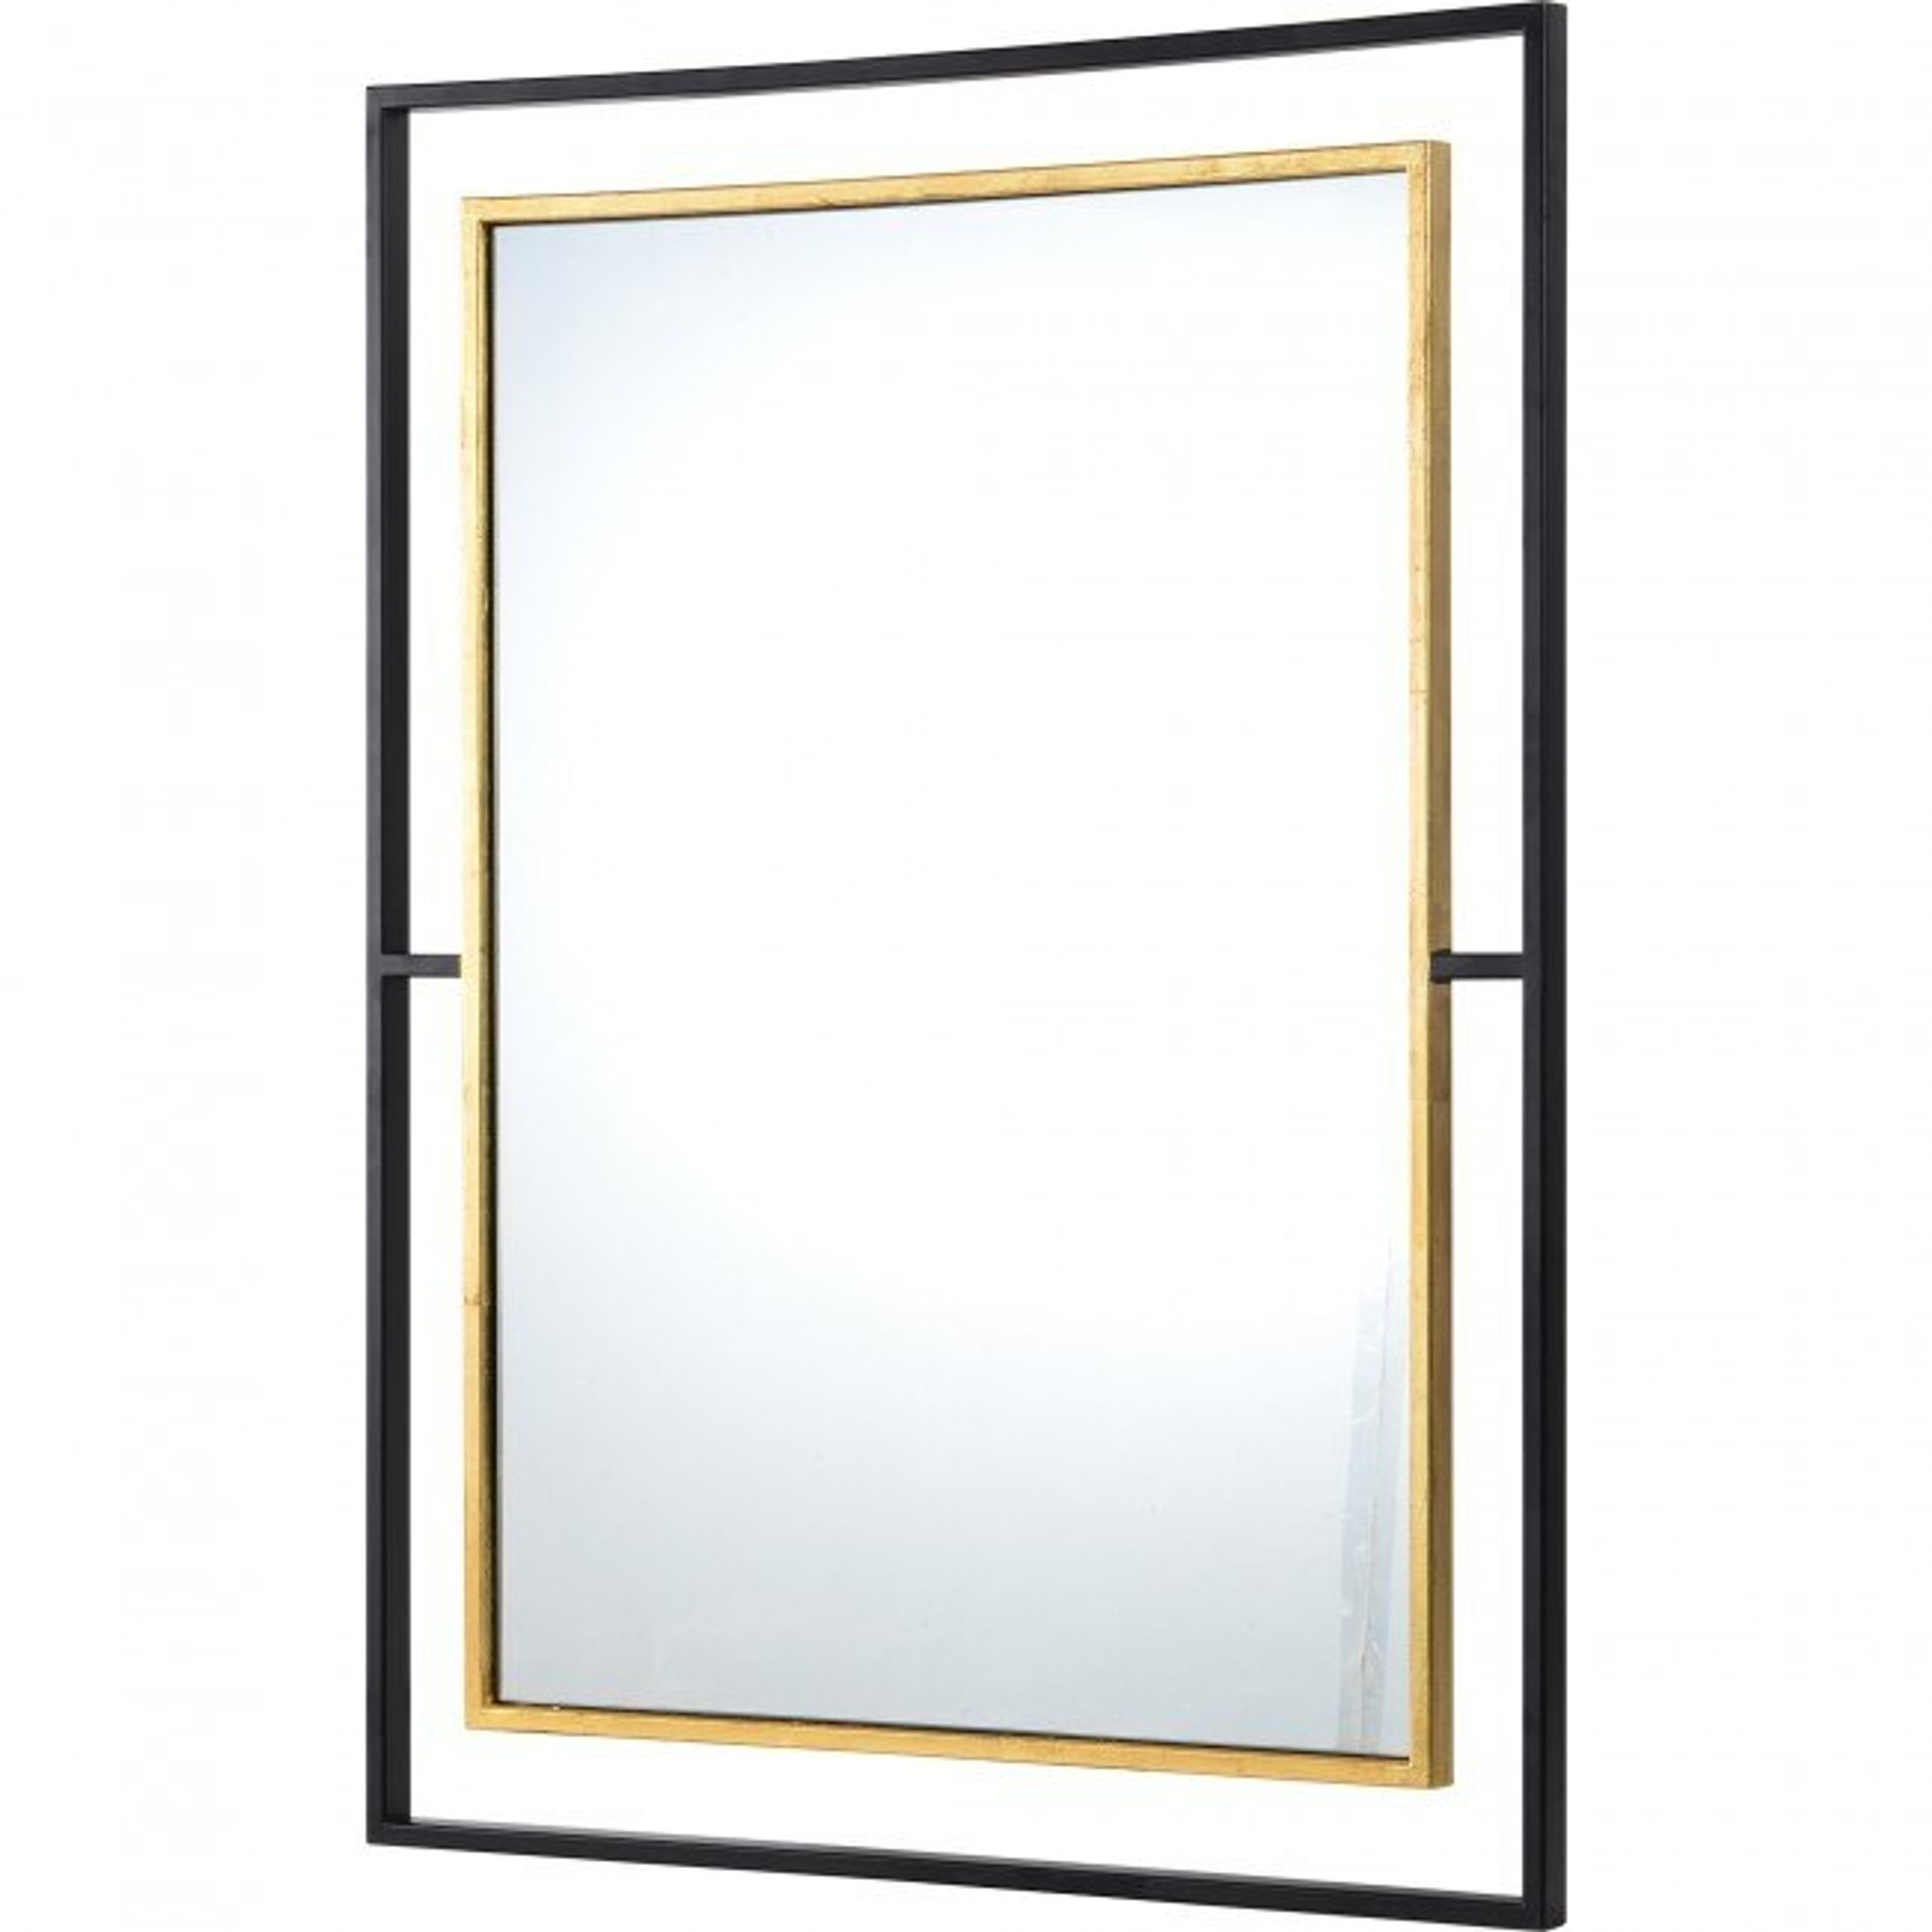 renwill gray rectangular black and gold metal tall floating bathroom powder room cb2 west elm wall mirror 